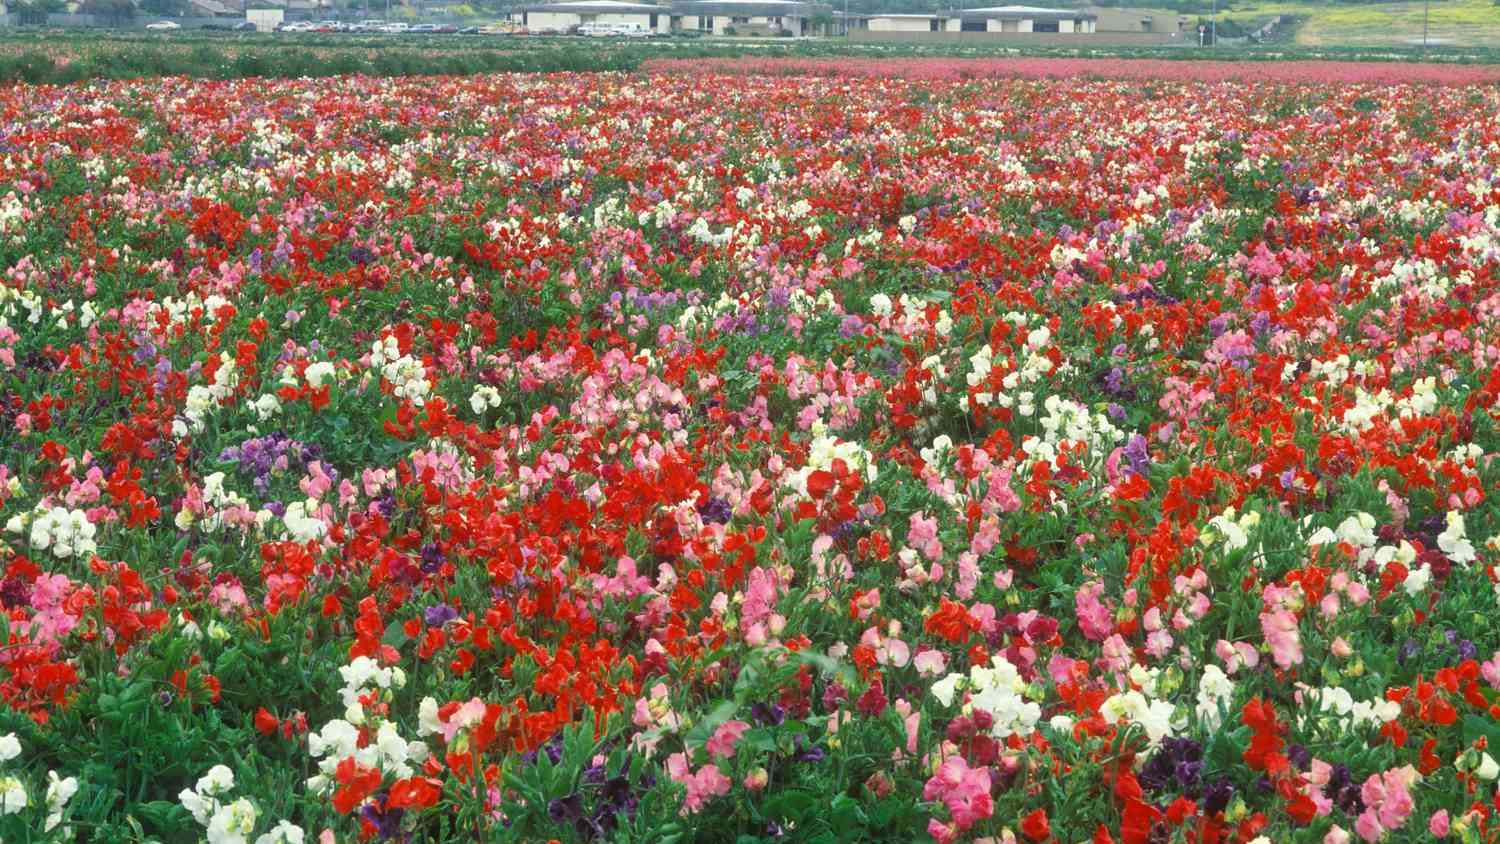 Lompoc Flower Fields, California